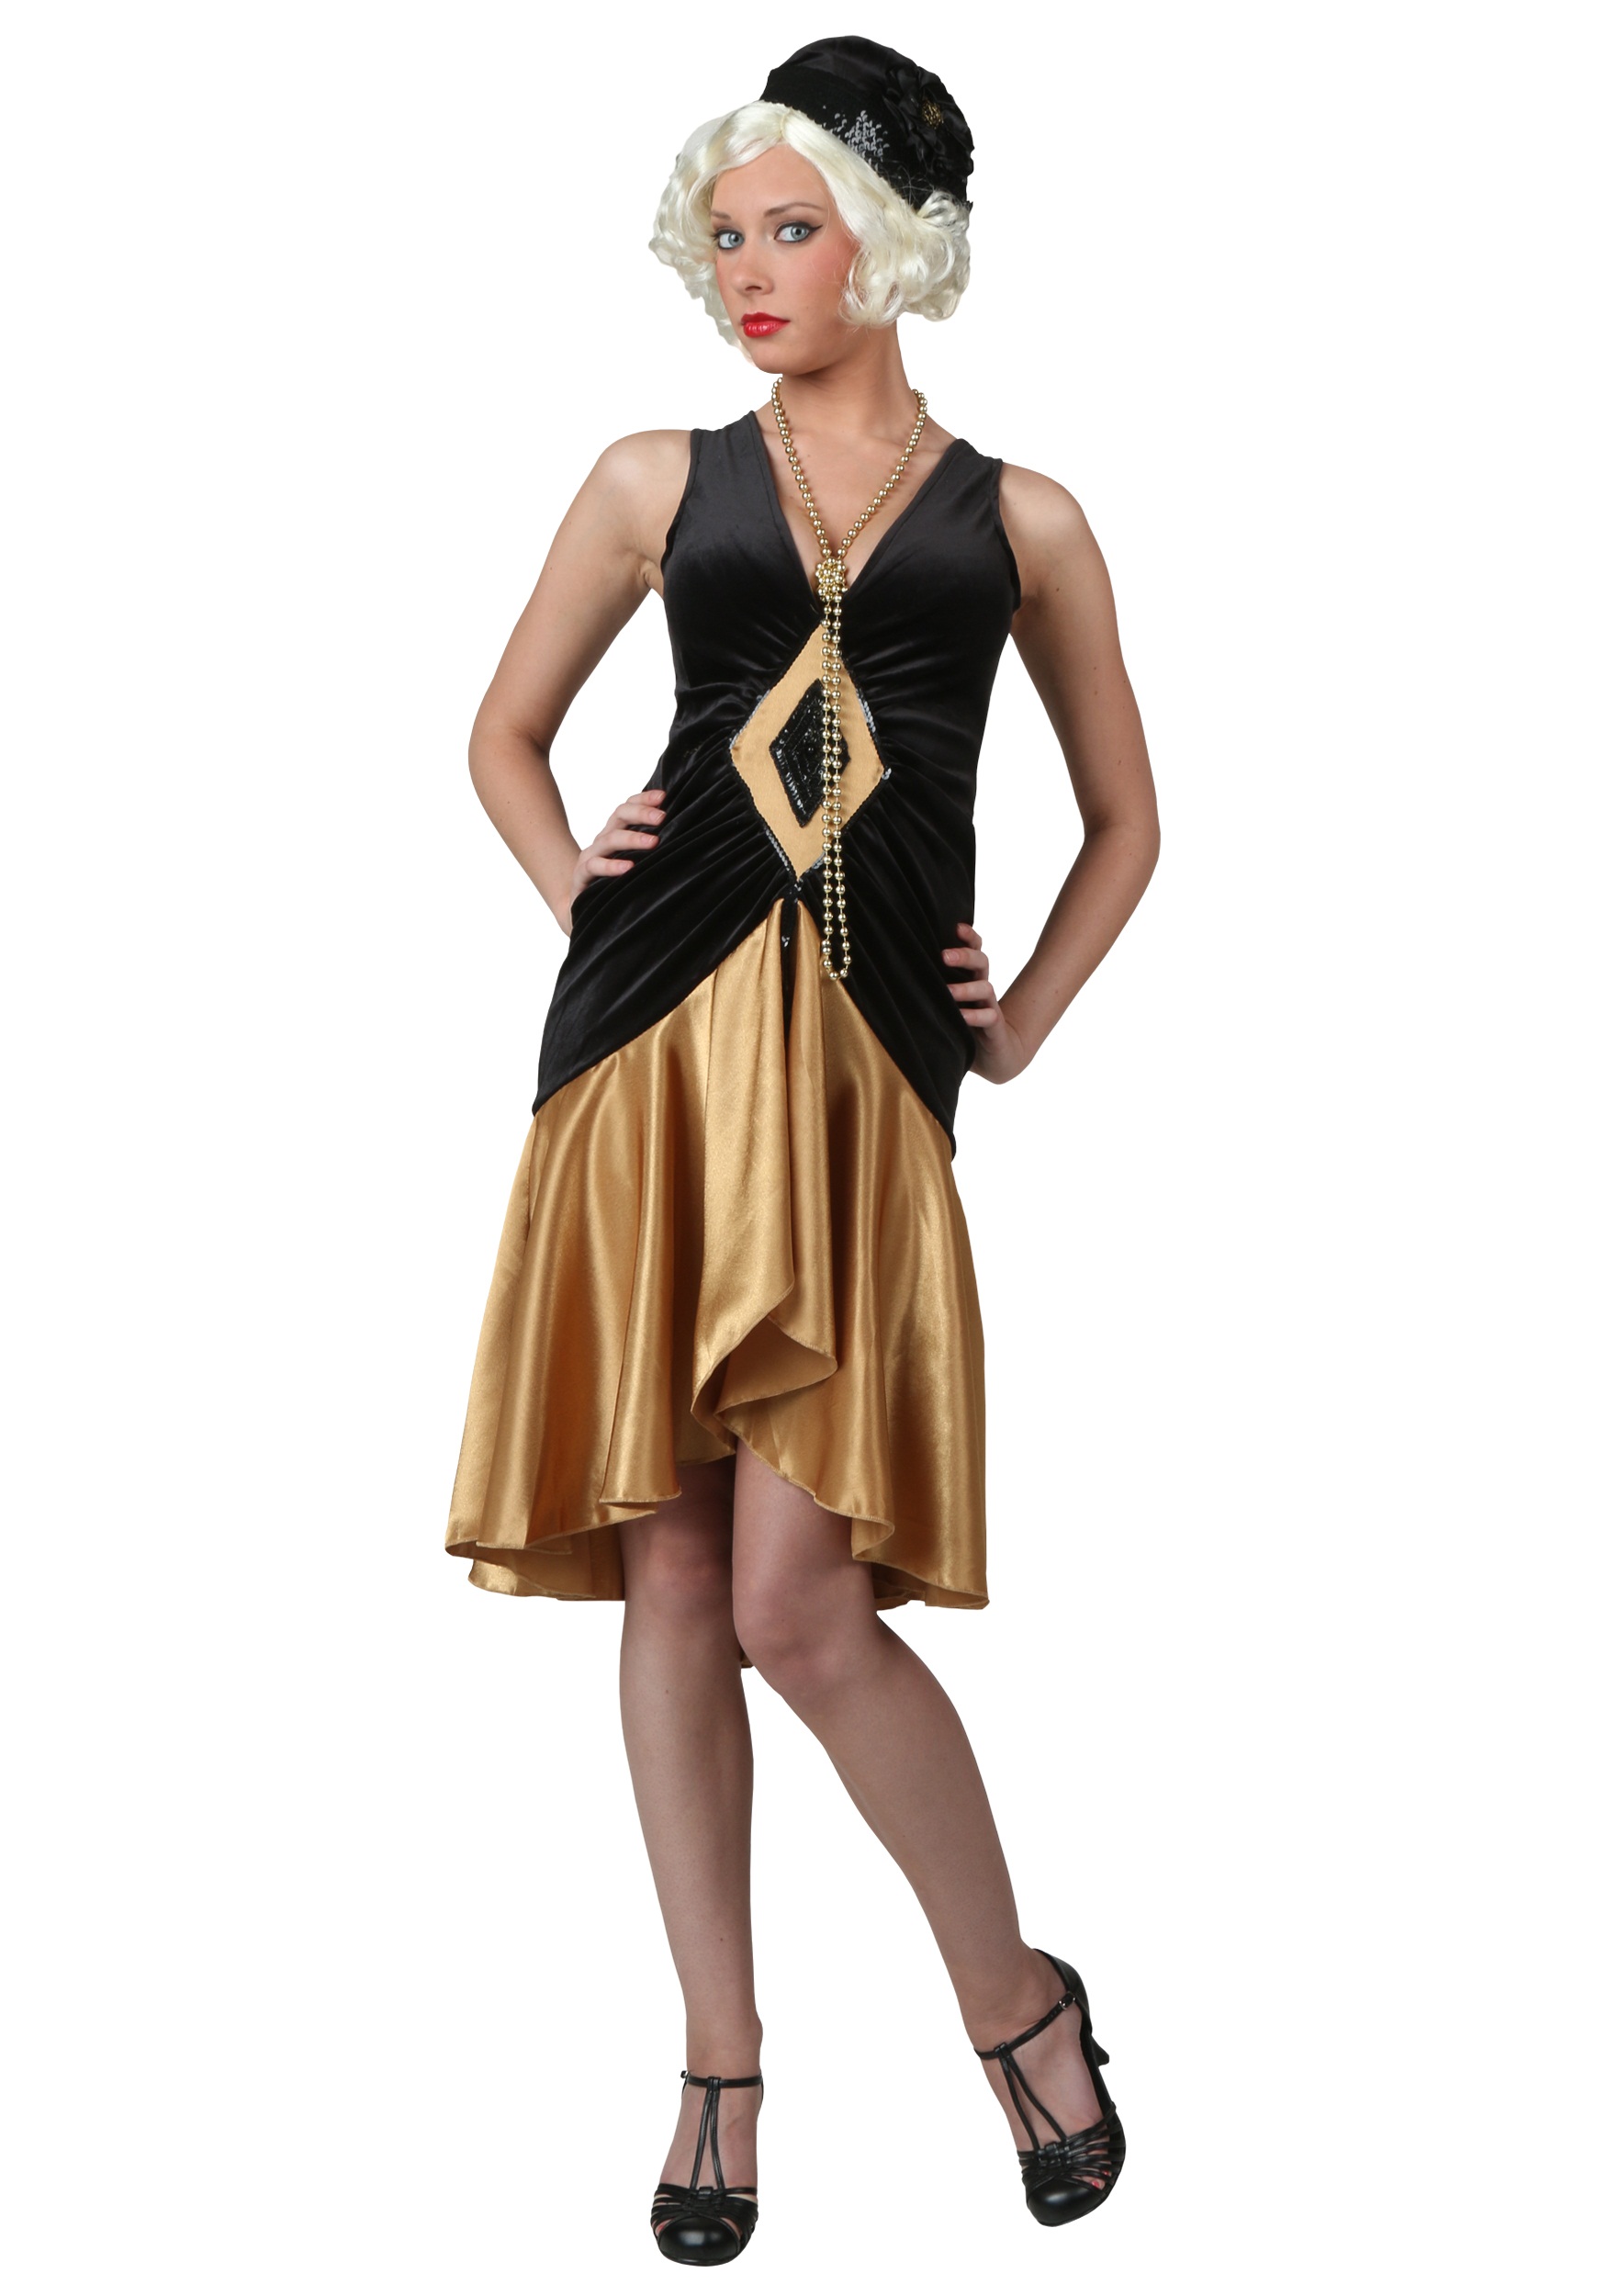 Photos - Fancy Dress FUN Costumes Roaring 20's Flapper Plus Size Costume for Women | Exclusive